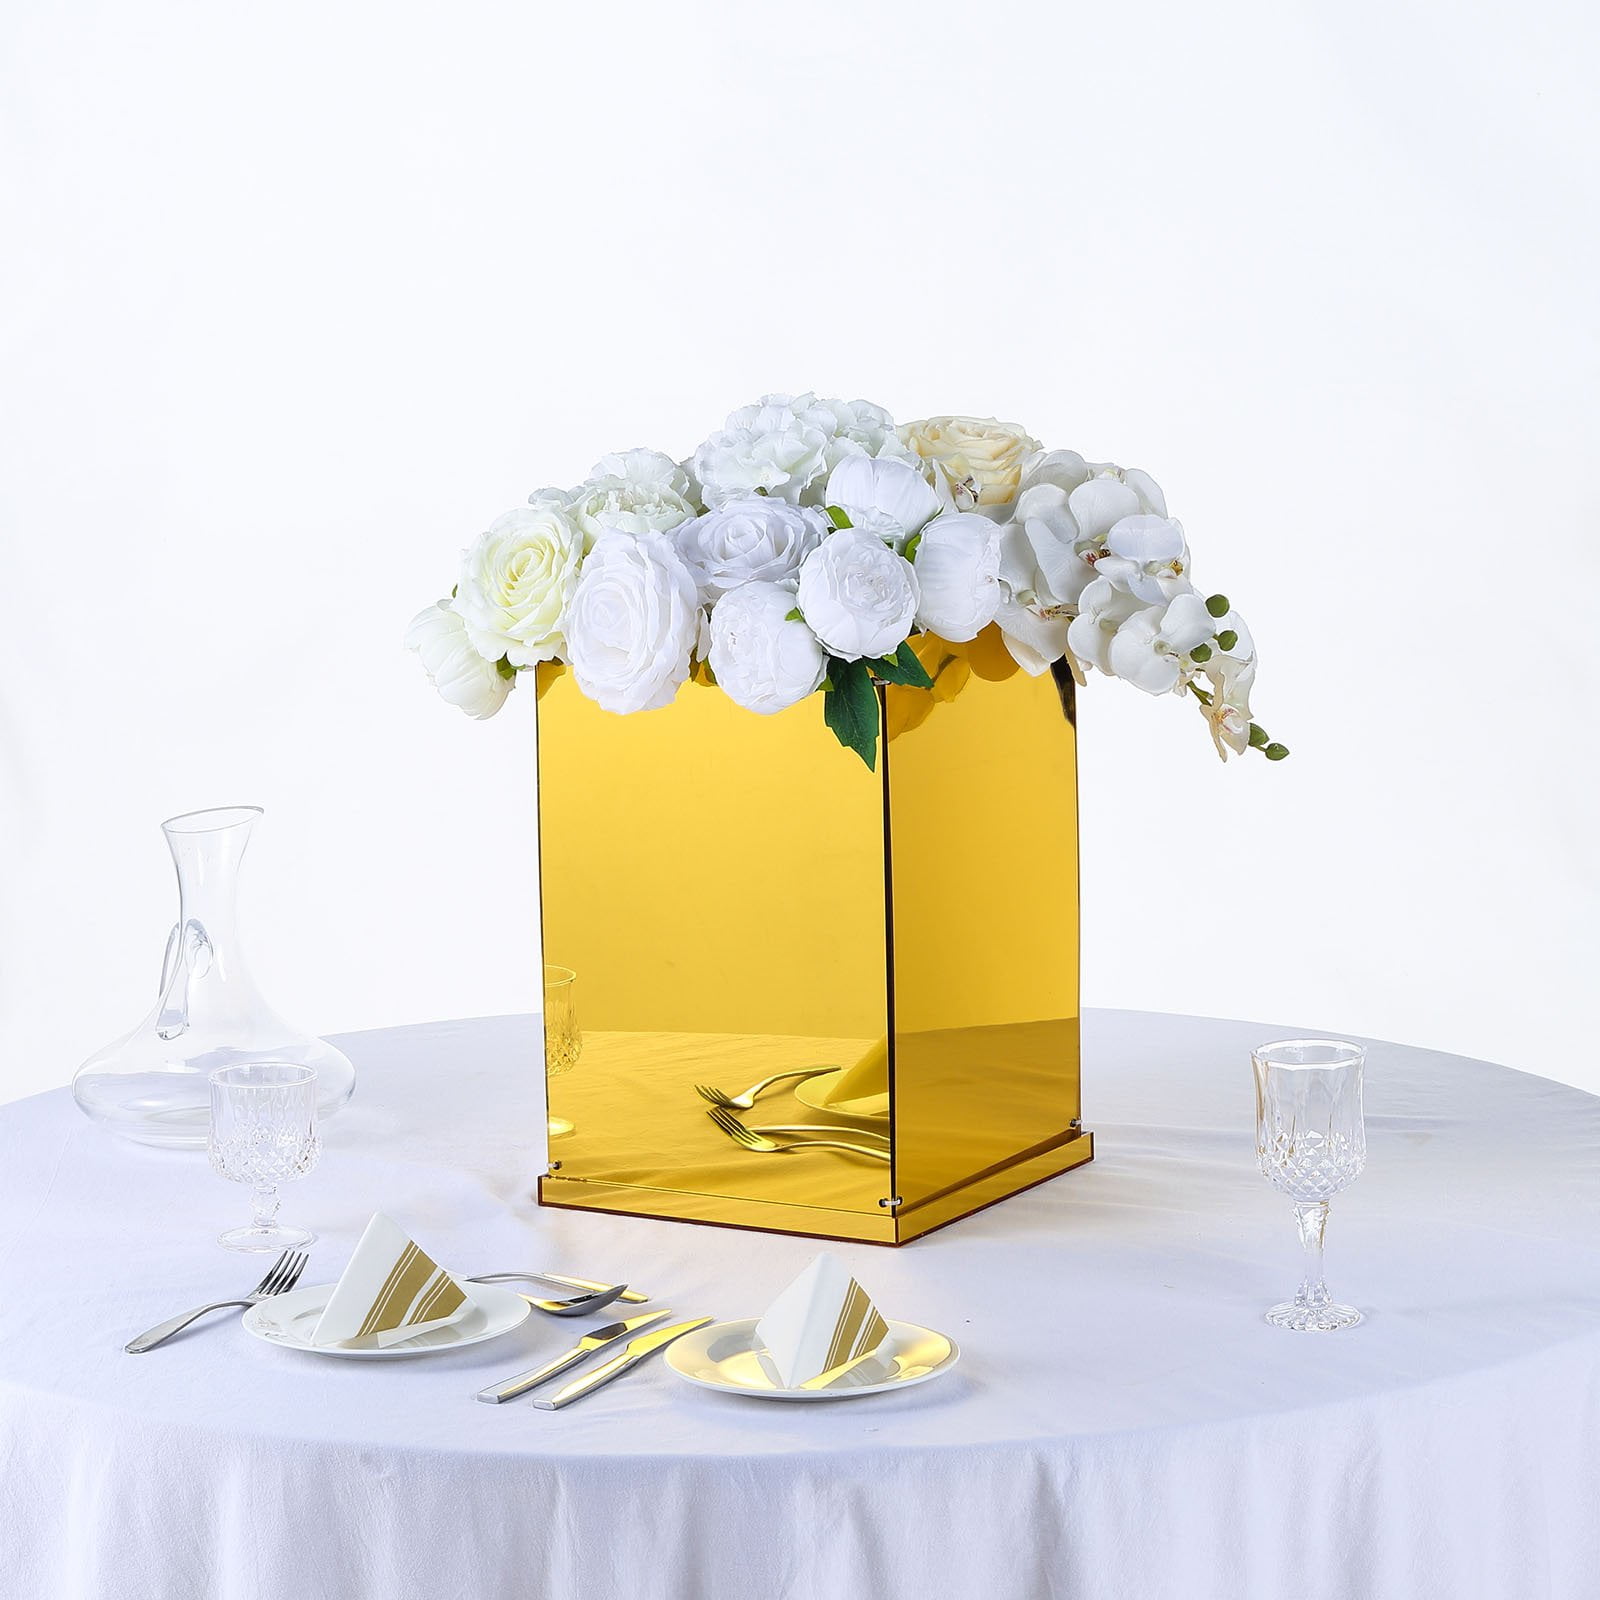 16 Gold Mirror Finish Wedding Decor, Mirror Boxes For Centerpieces